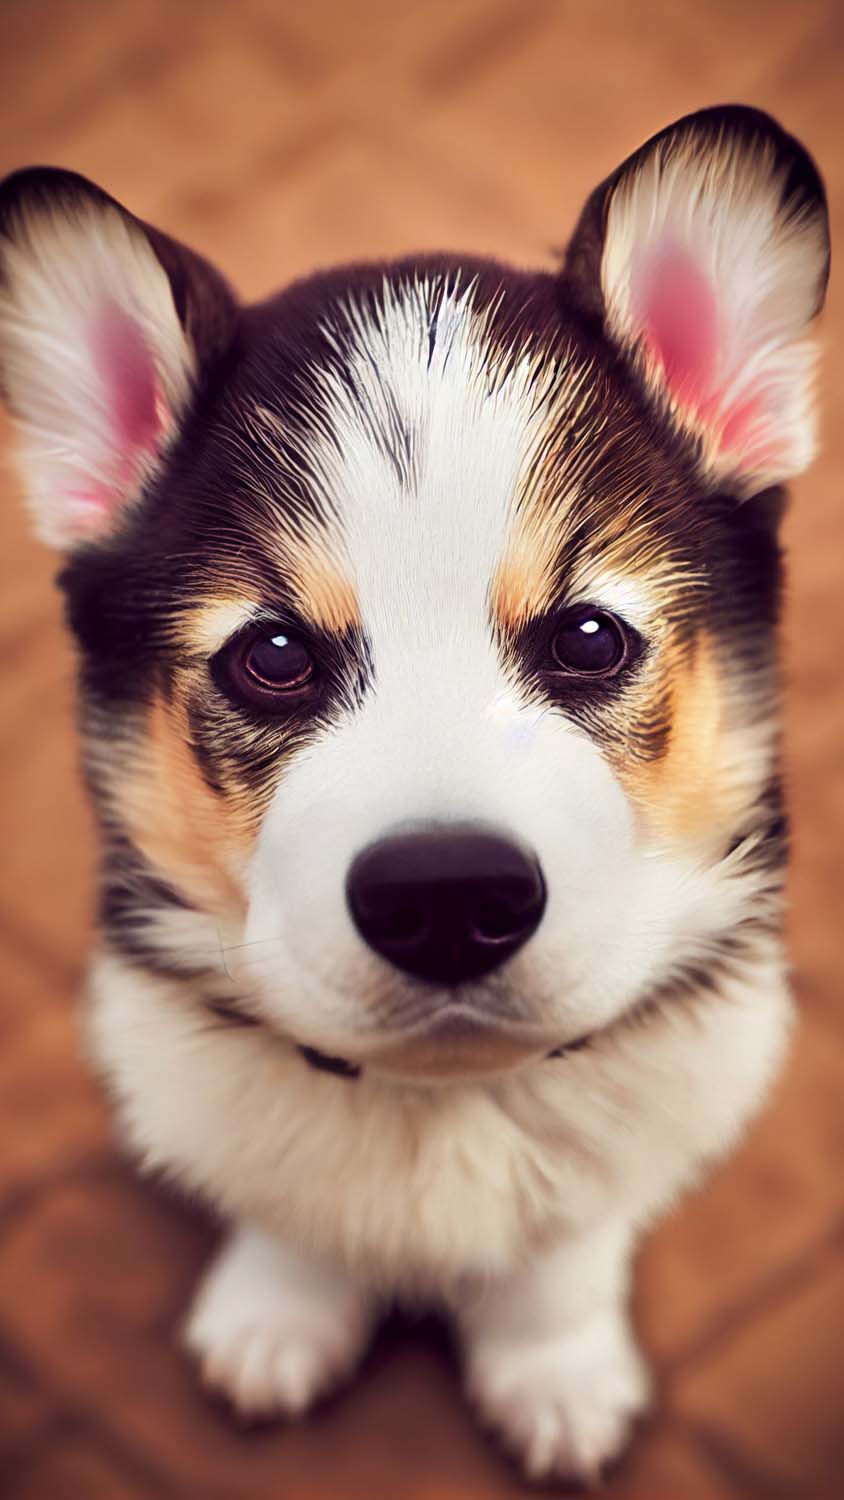 Cute puppy iphone wallpaper hd